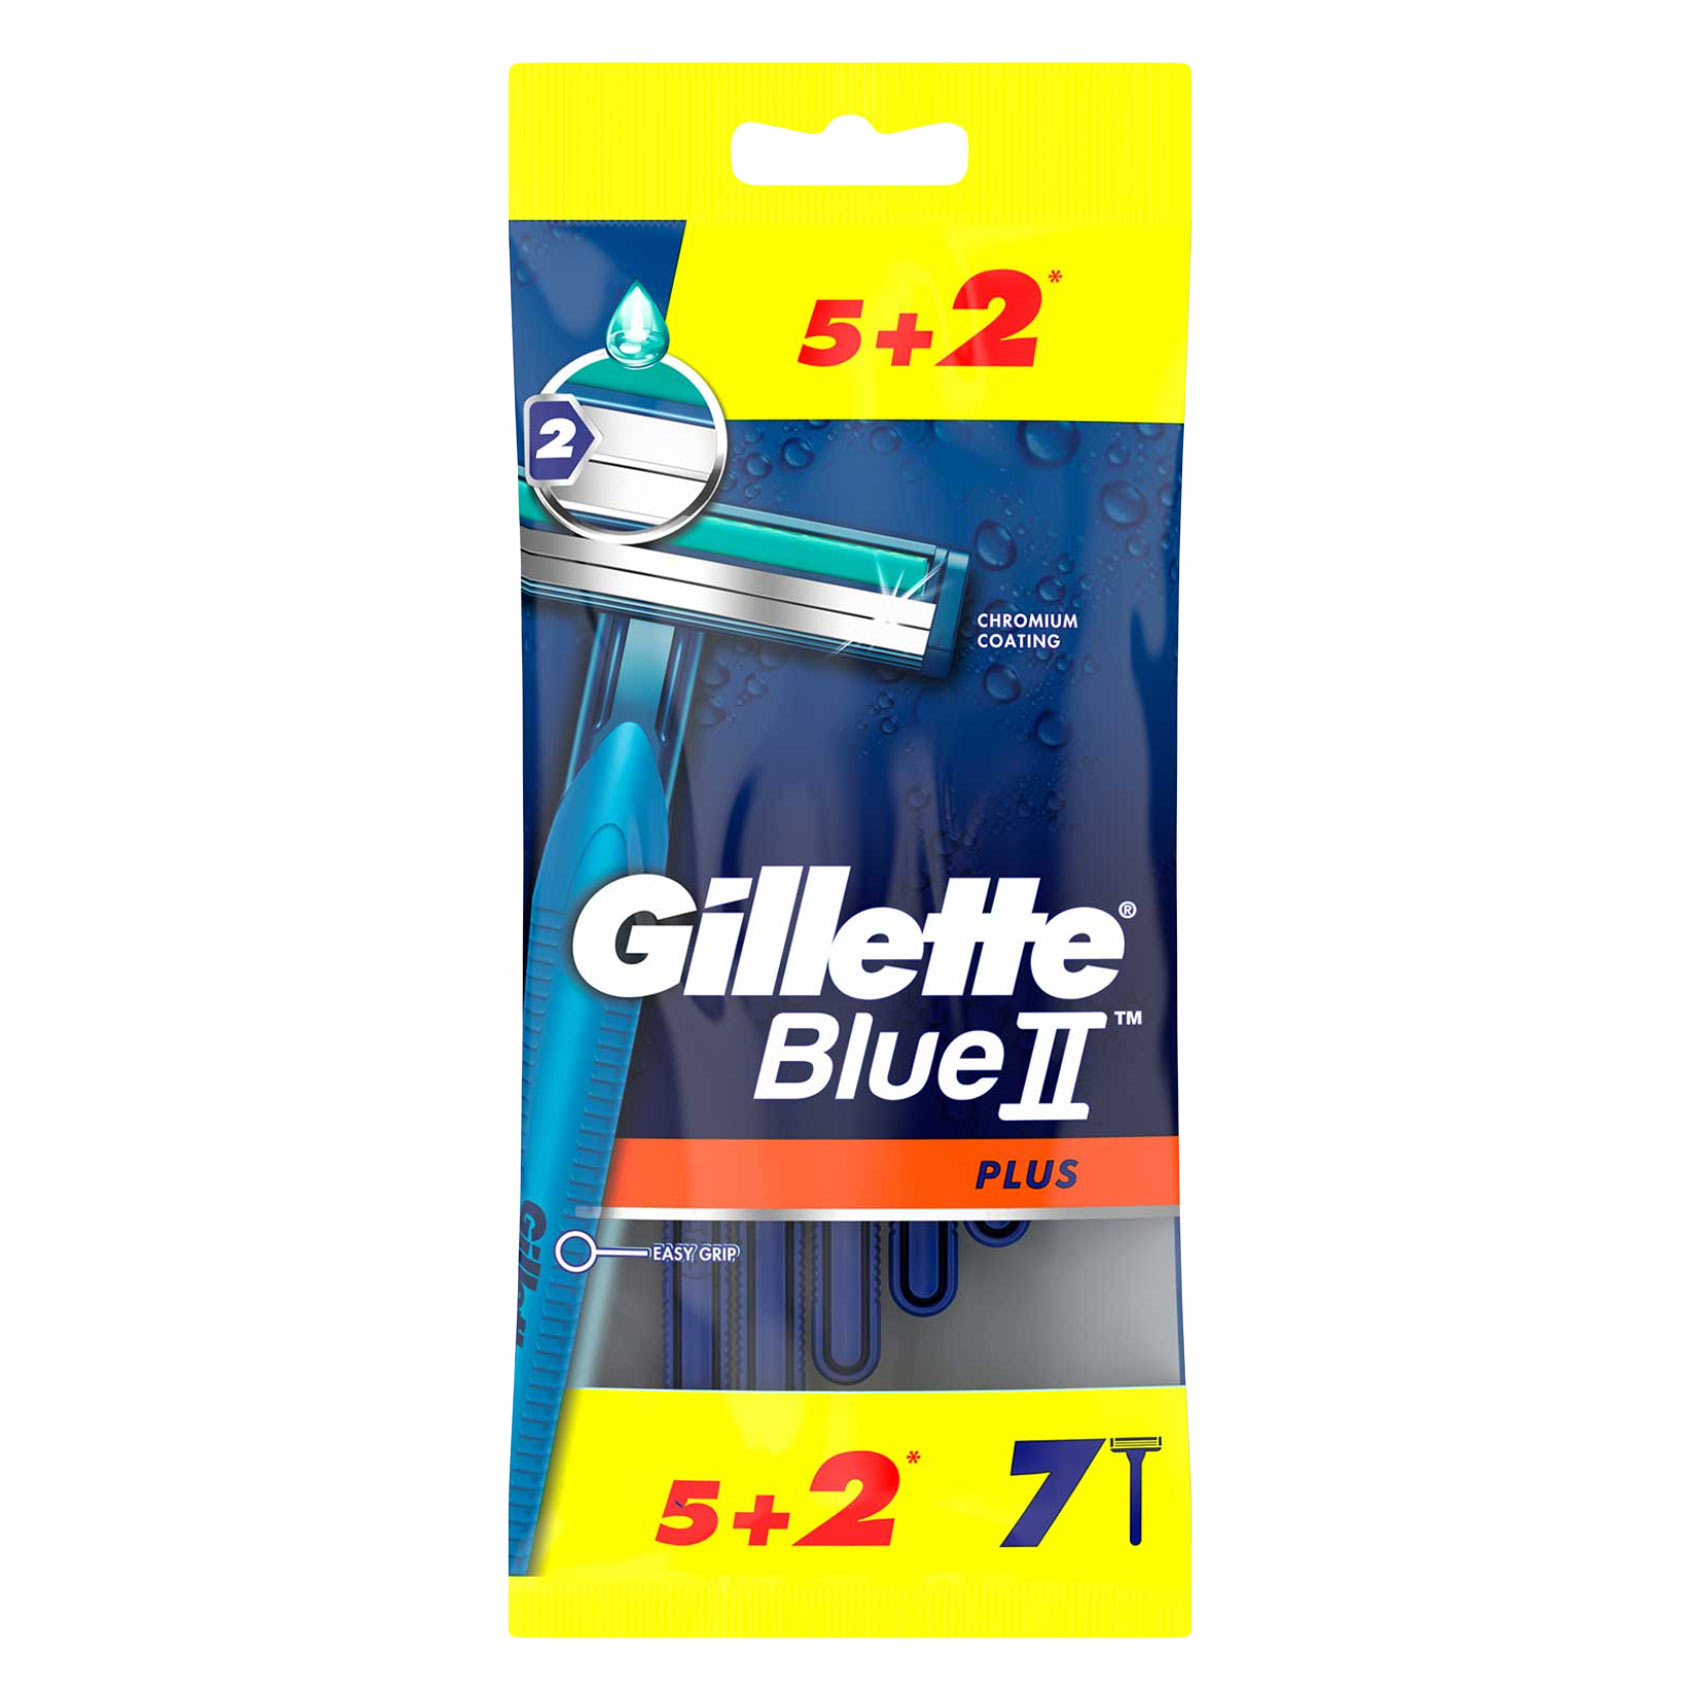 GILLETTE RAZOR BLUE II PLUS 5+2